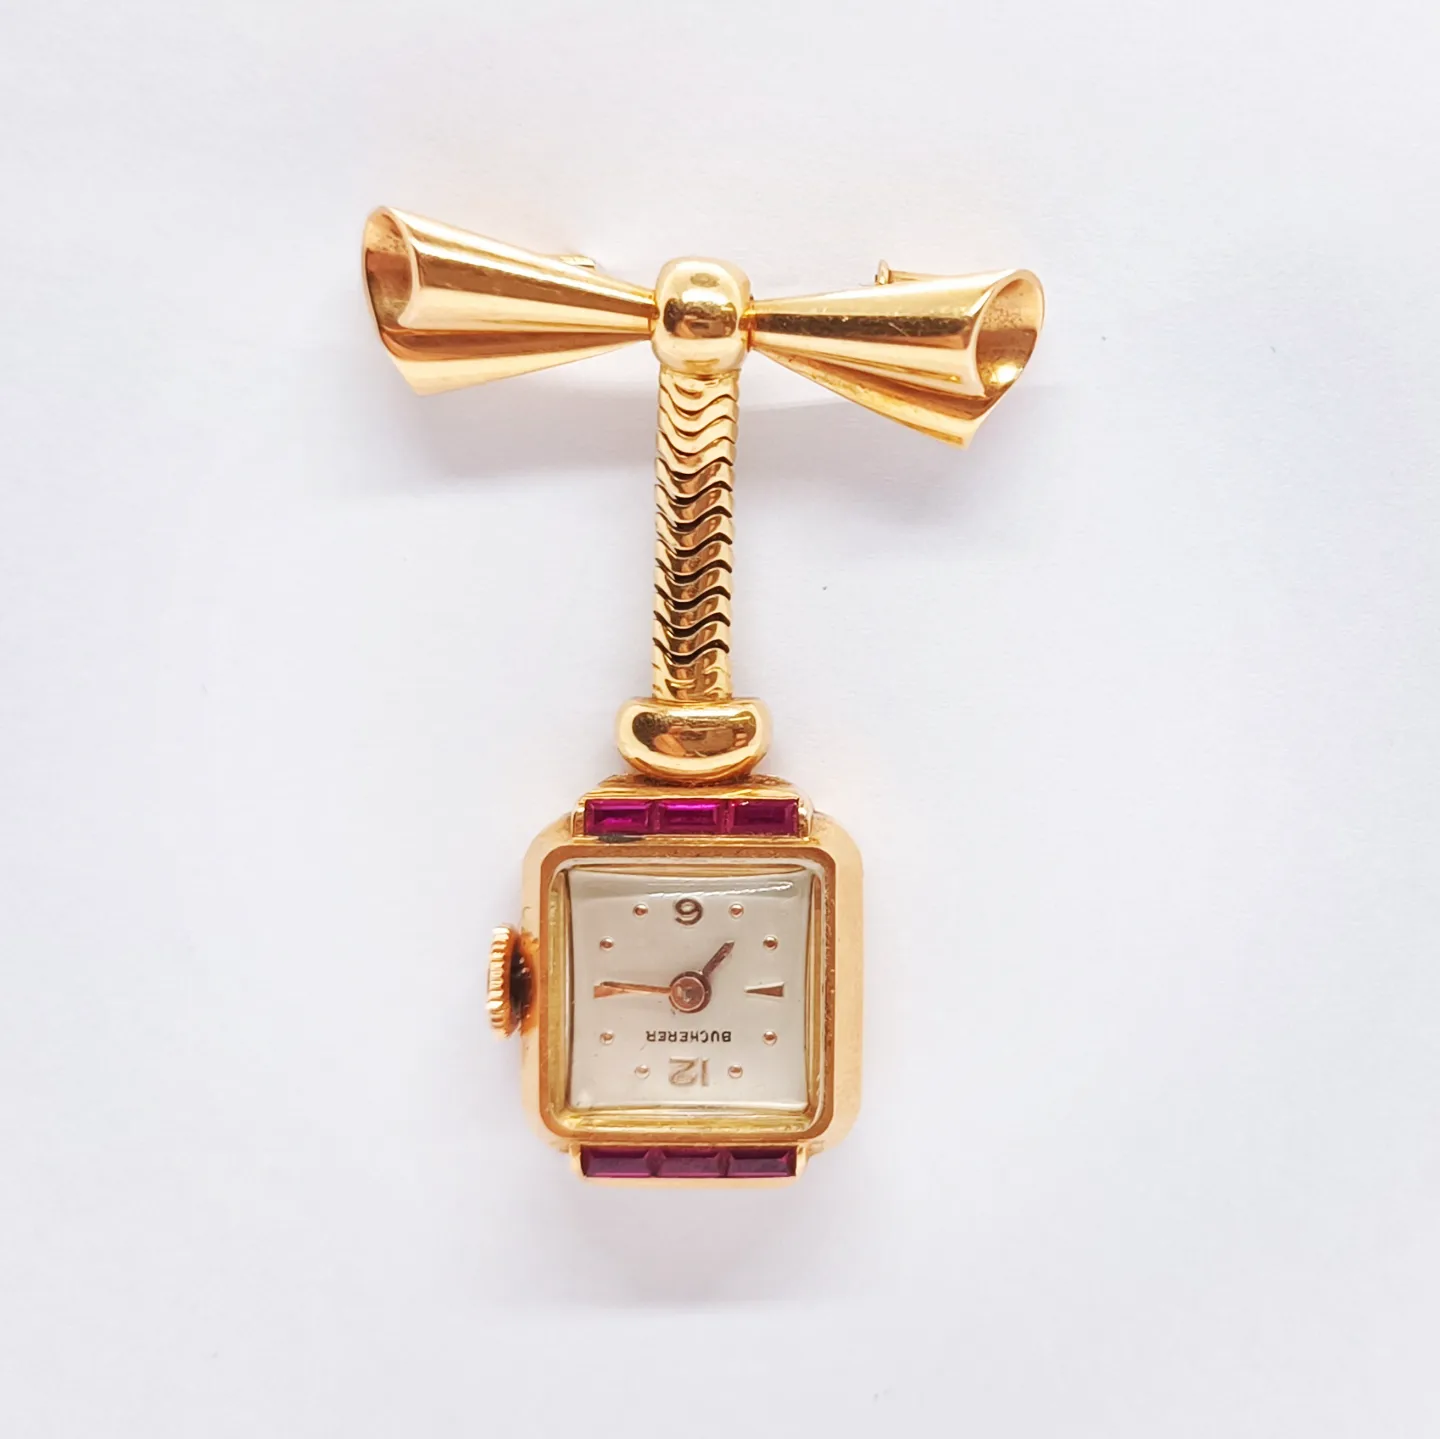 Zlatá brož s hodinkami zn. Bucherer